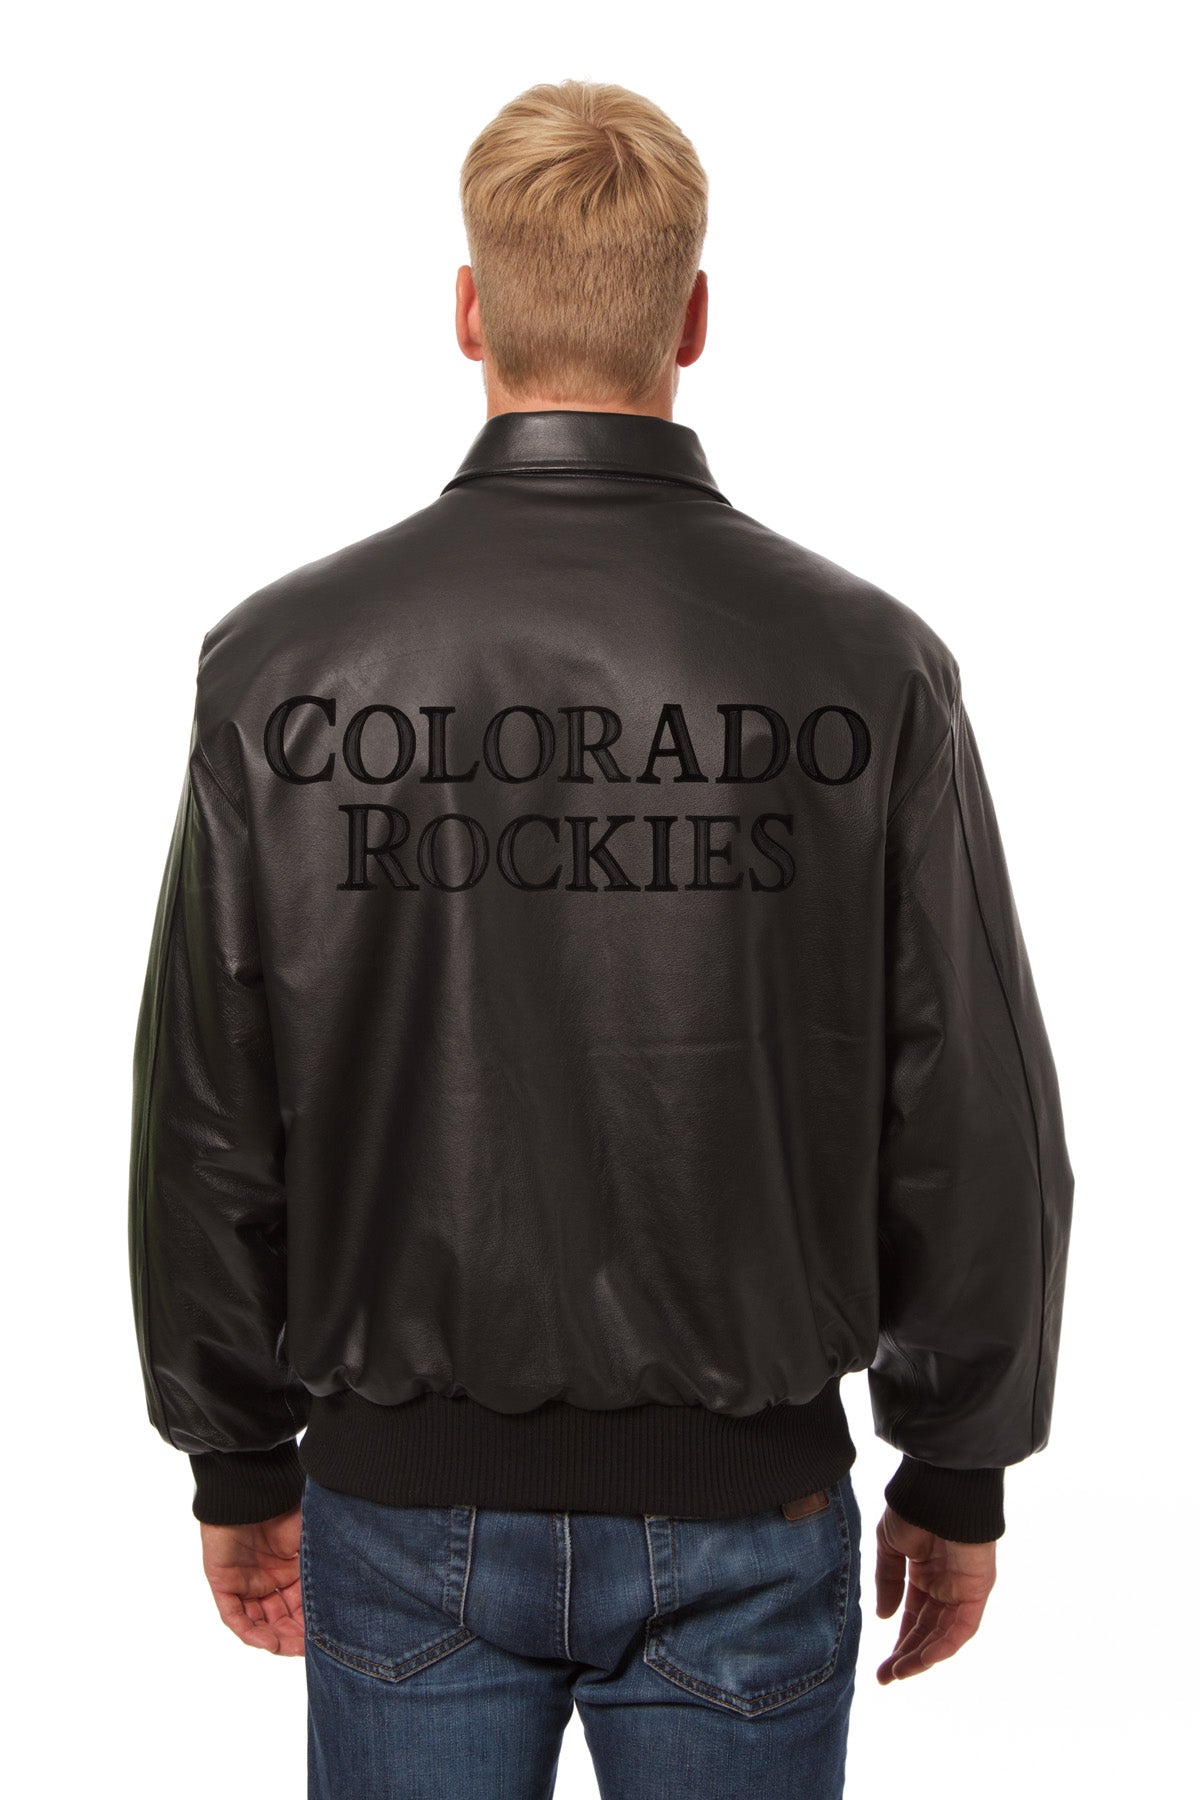 Colorado Rockies Lettermen Jacket - William Jacket